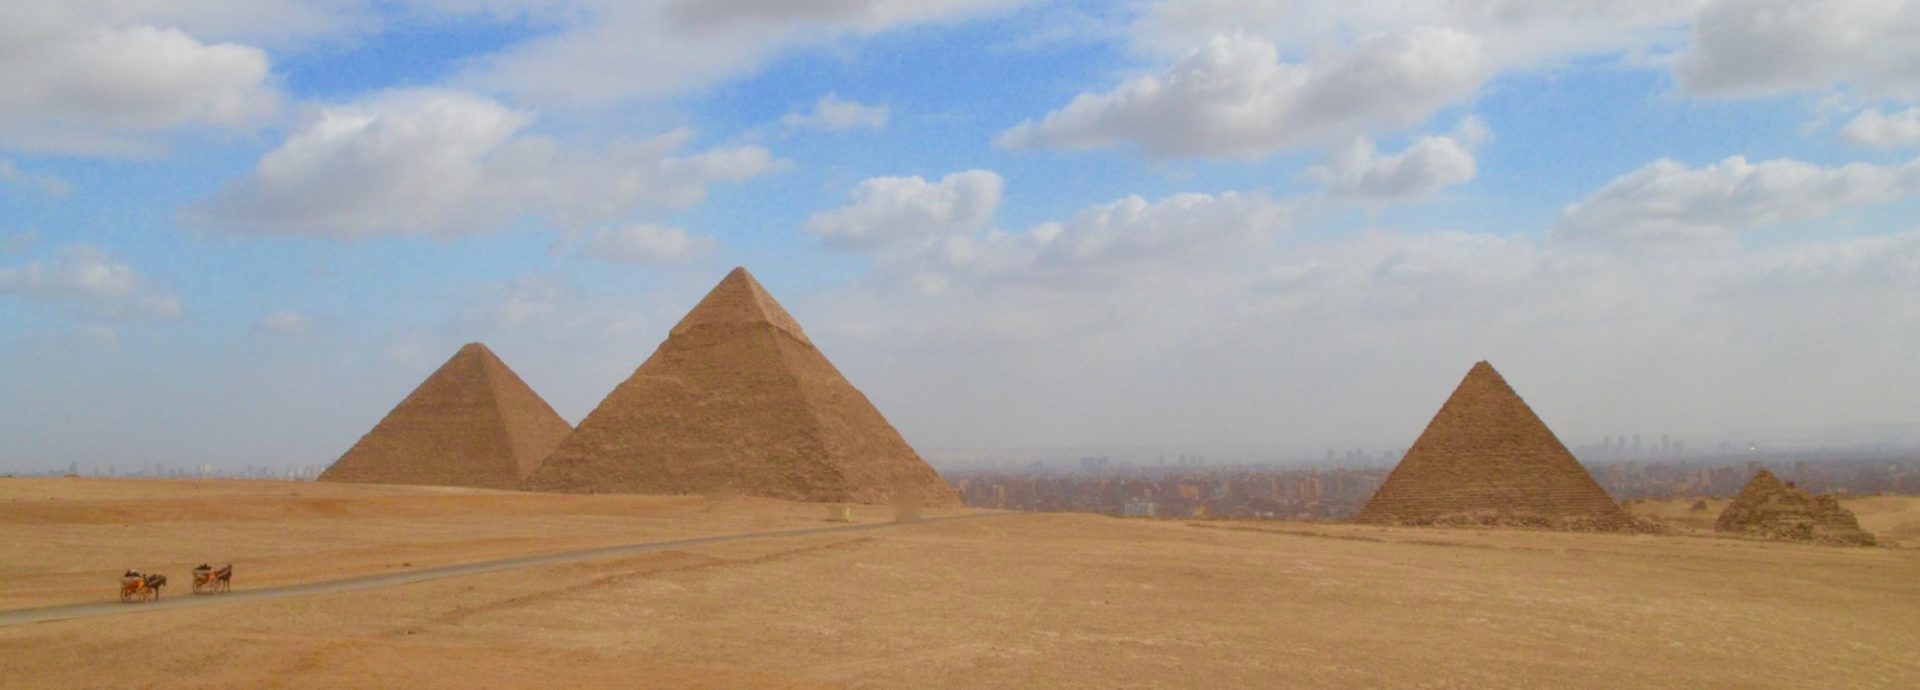 Photo of The Pyramids